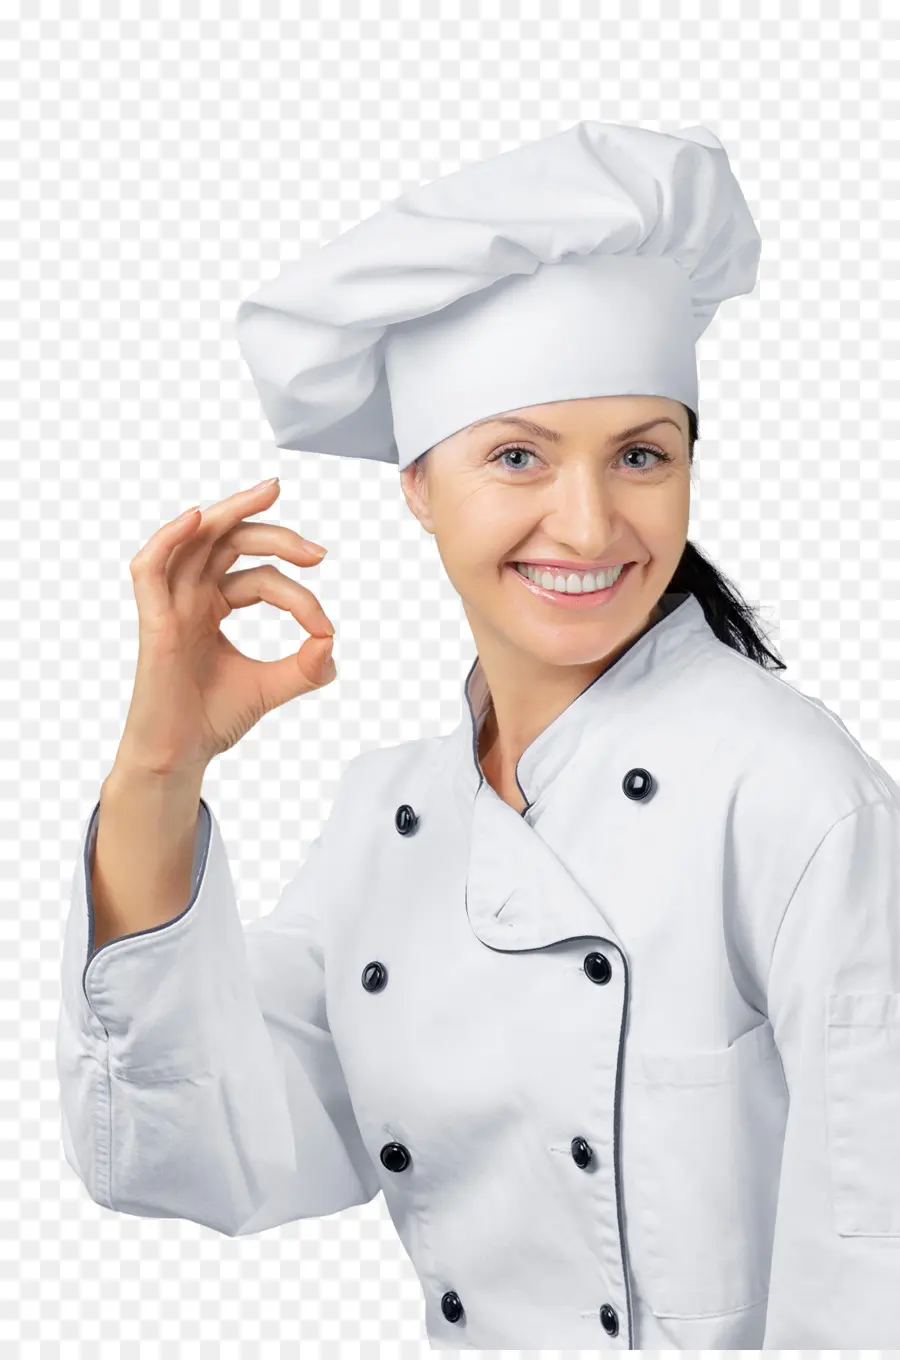 шеф повар，шеф повар униформы PNG